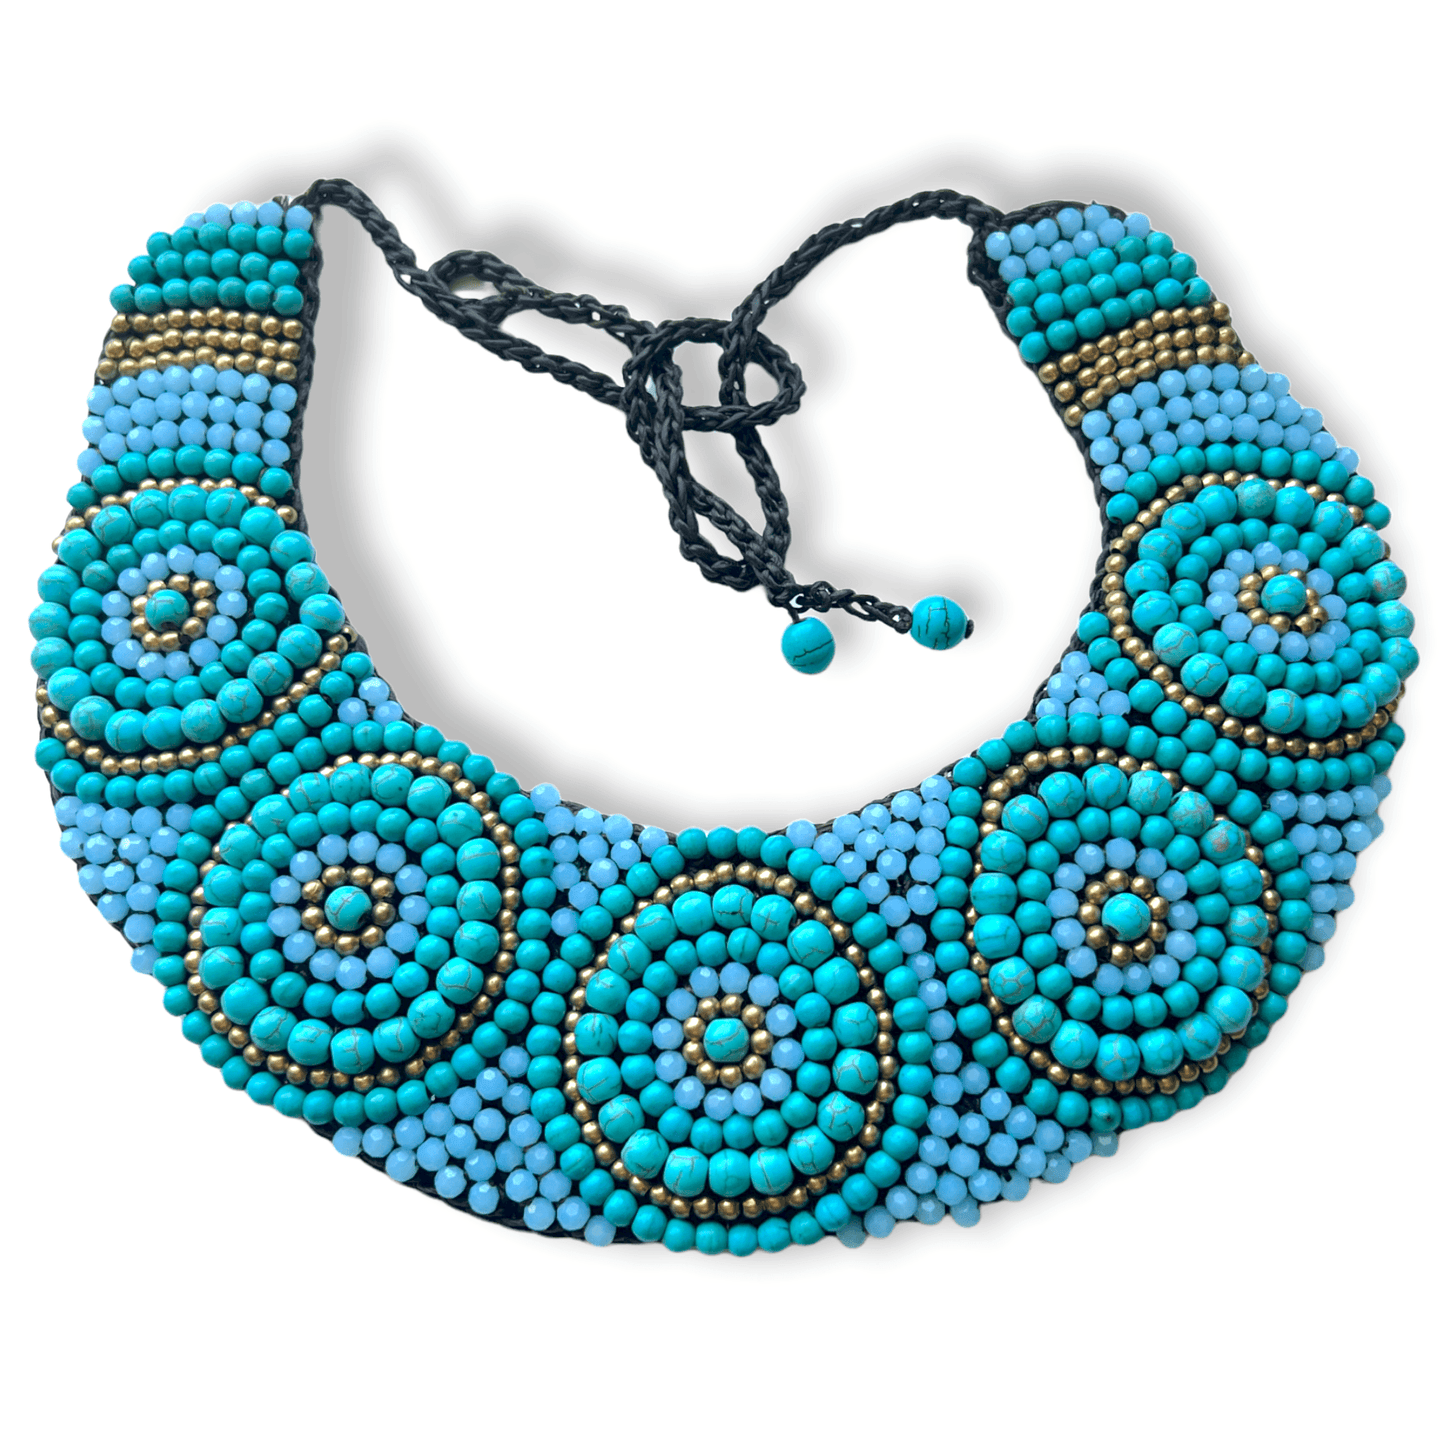 Beaded blue and turquoise beaded bib necklace - Sundara Joon